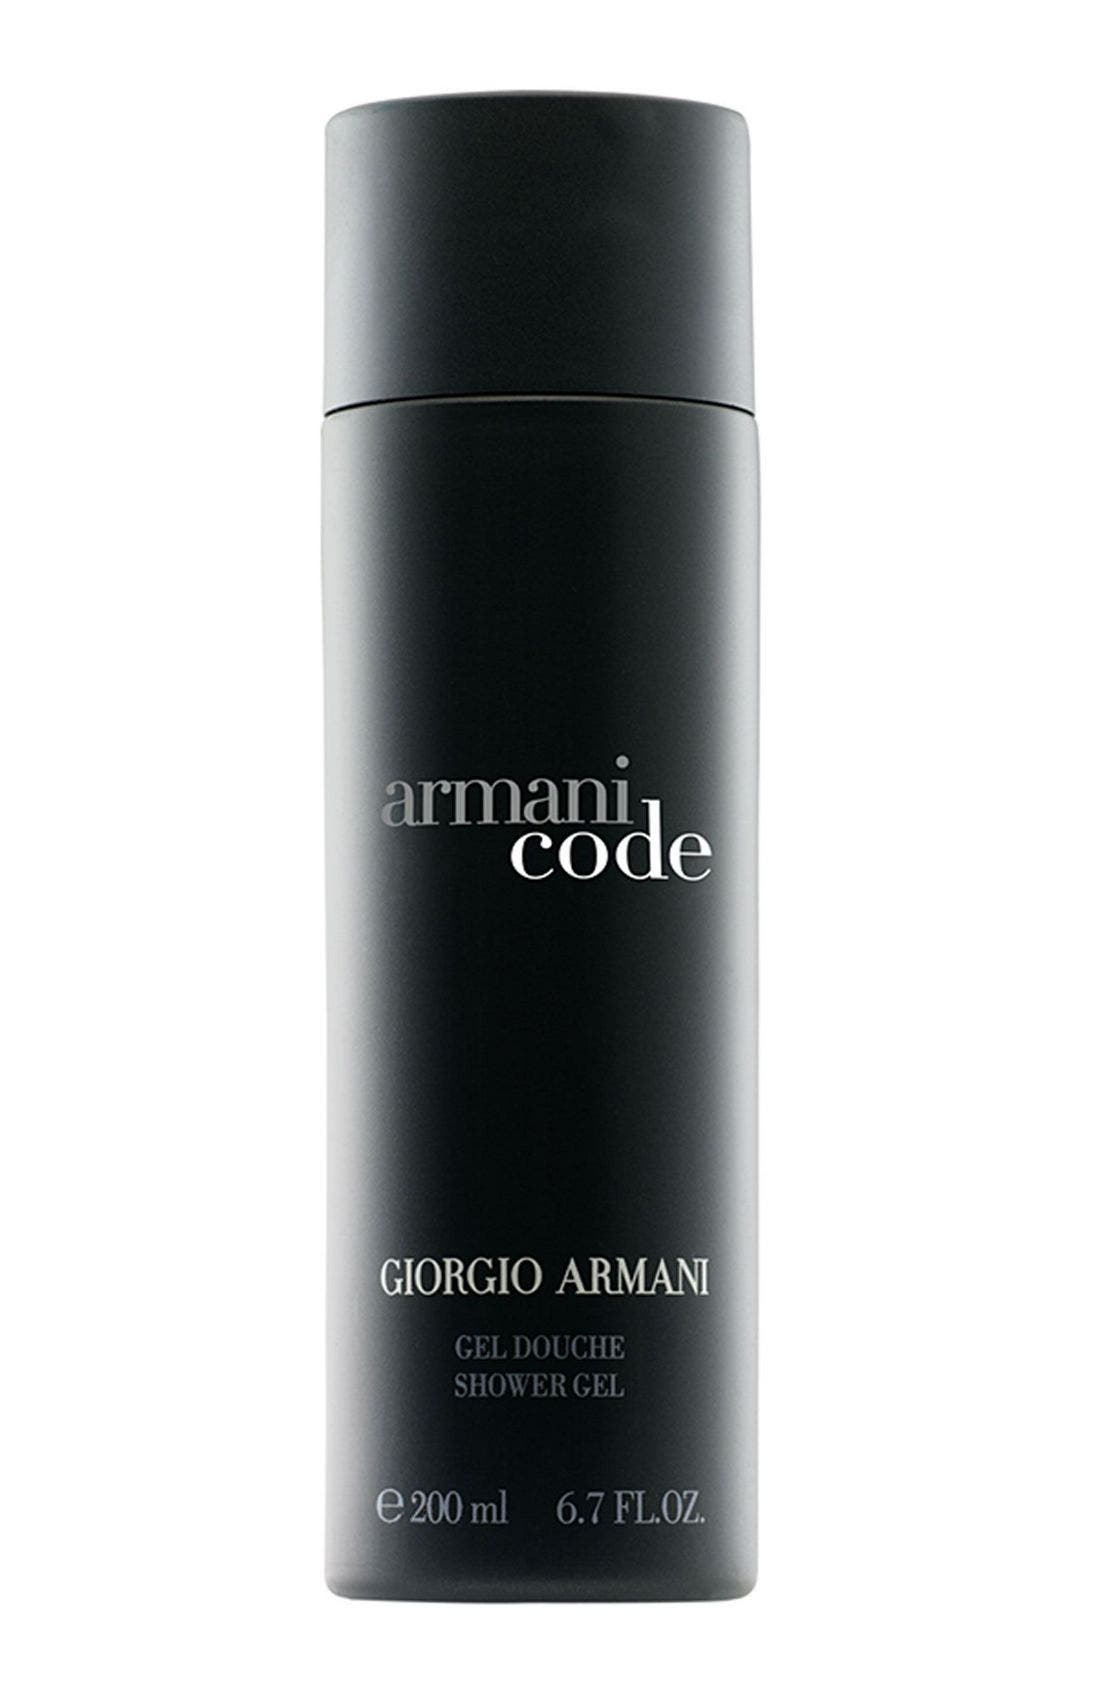 armani code shower gel boots - 53% OFF 